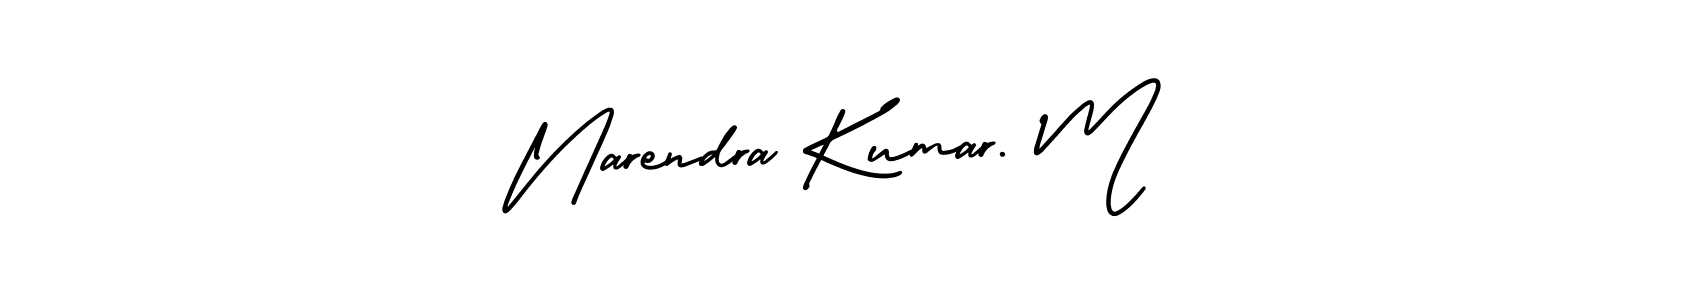 How to Draw Narendra Kumar. M signature style? AmerikaSignatureDemo-Regular is a latest design signature styles for name Narendra Kumar. M. Narendra Kumar. M signature style 3 images and pictures png